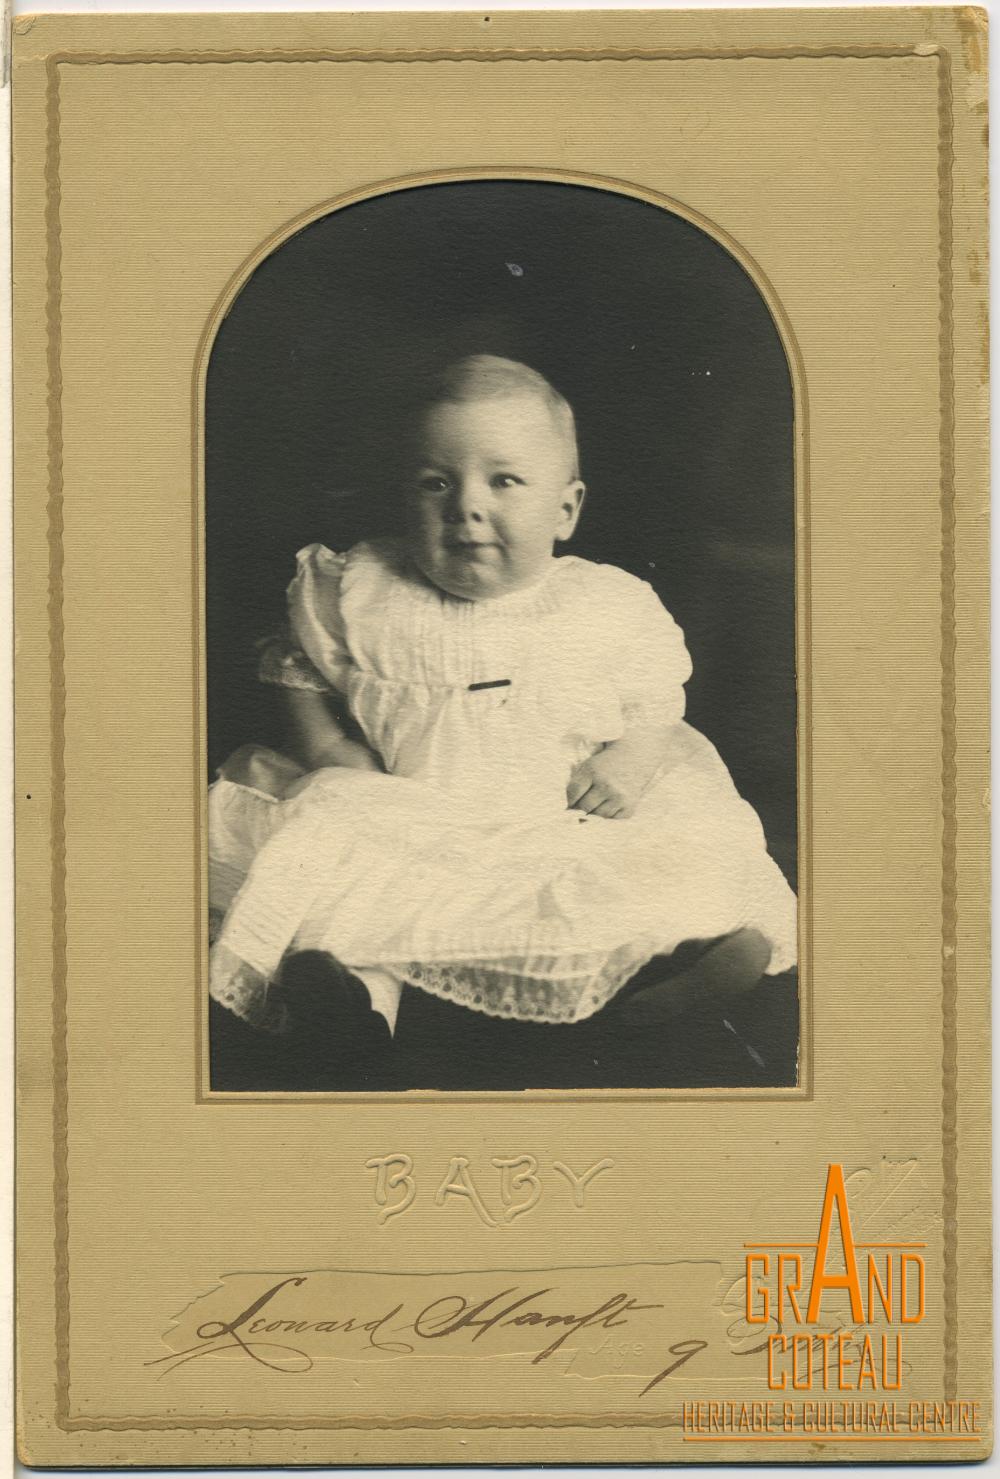 Photograph, Leonard 'Hymie' Hanft at 9 months old